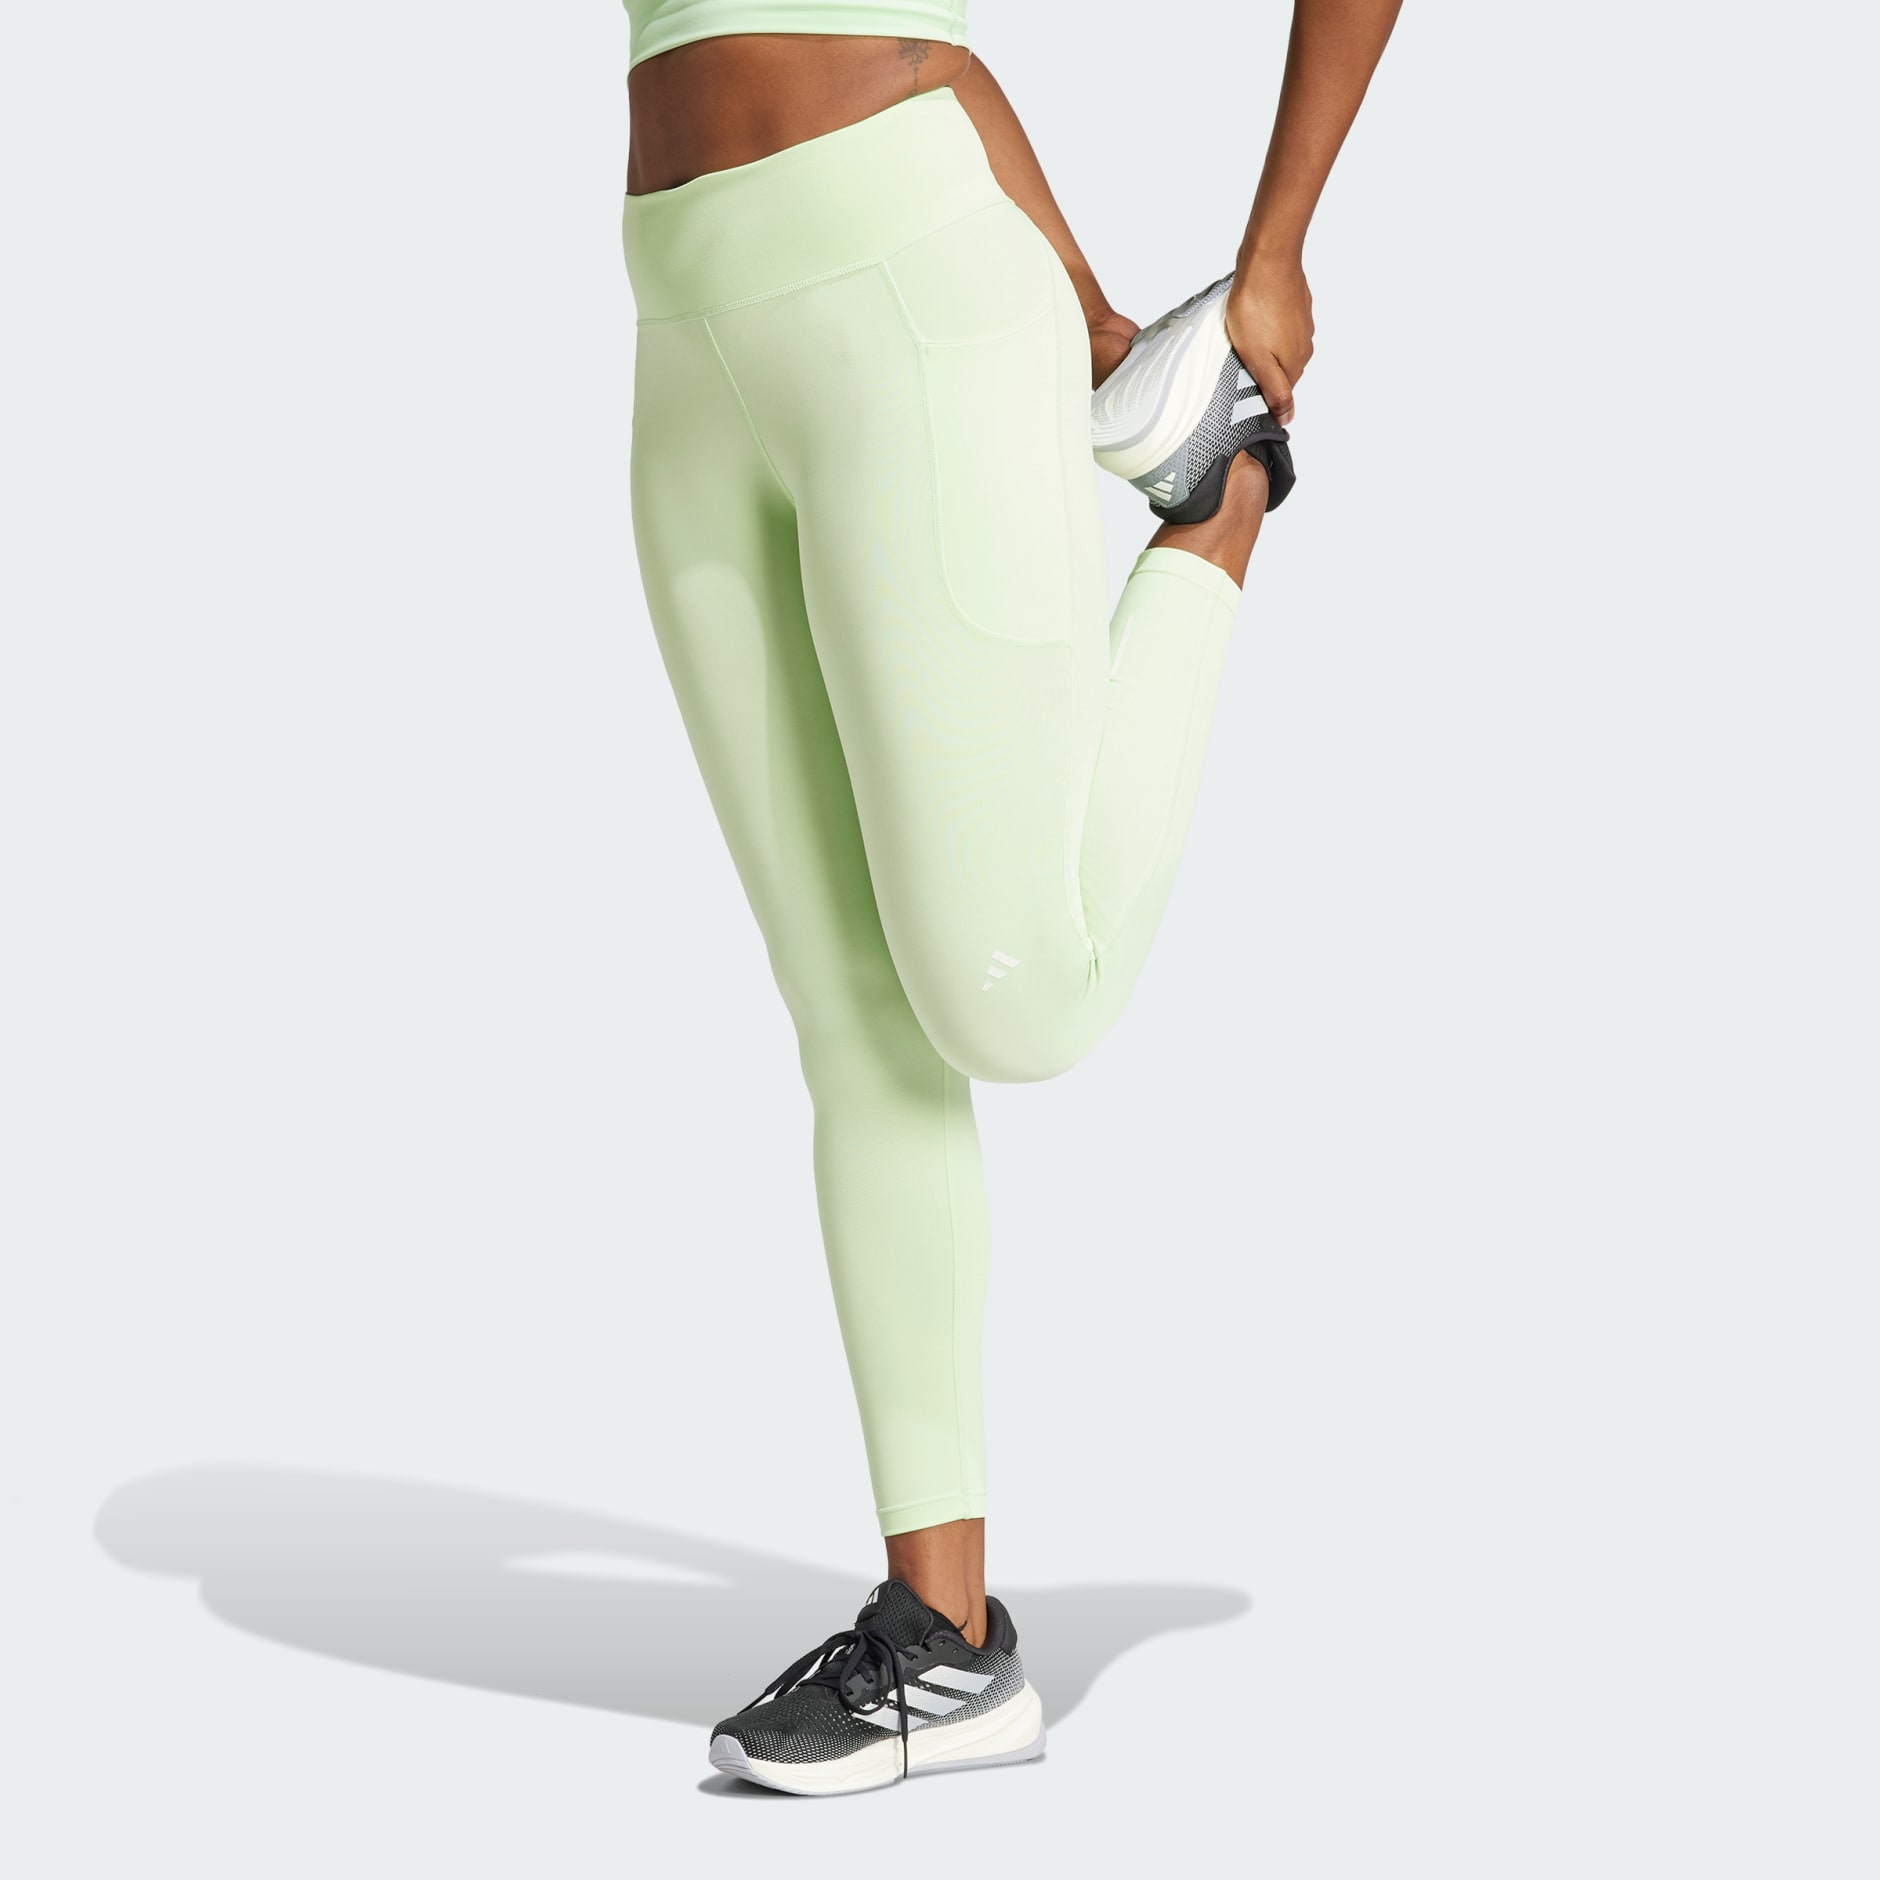 Adidas training leggings in mint green